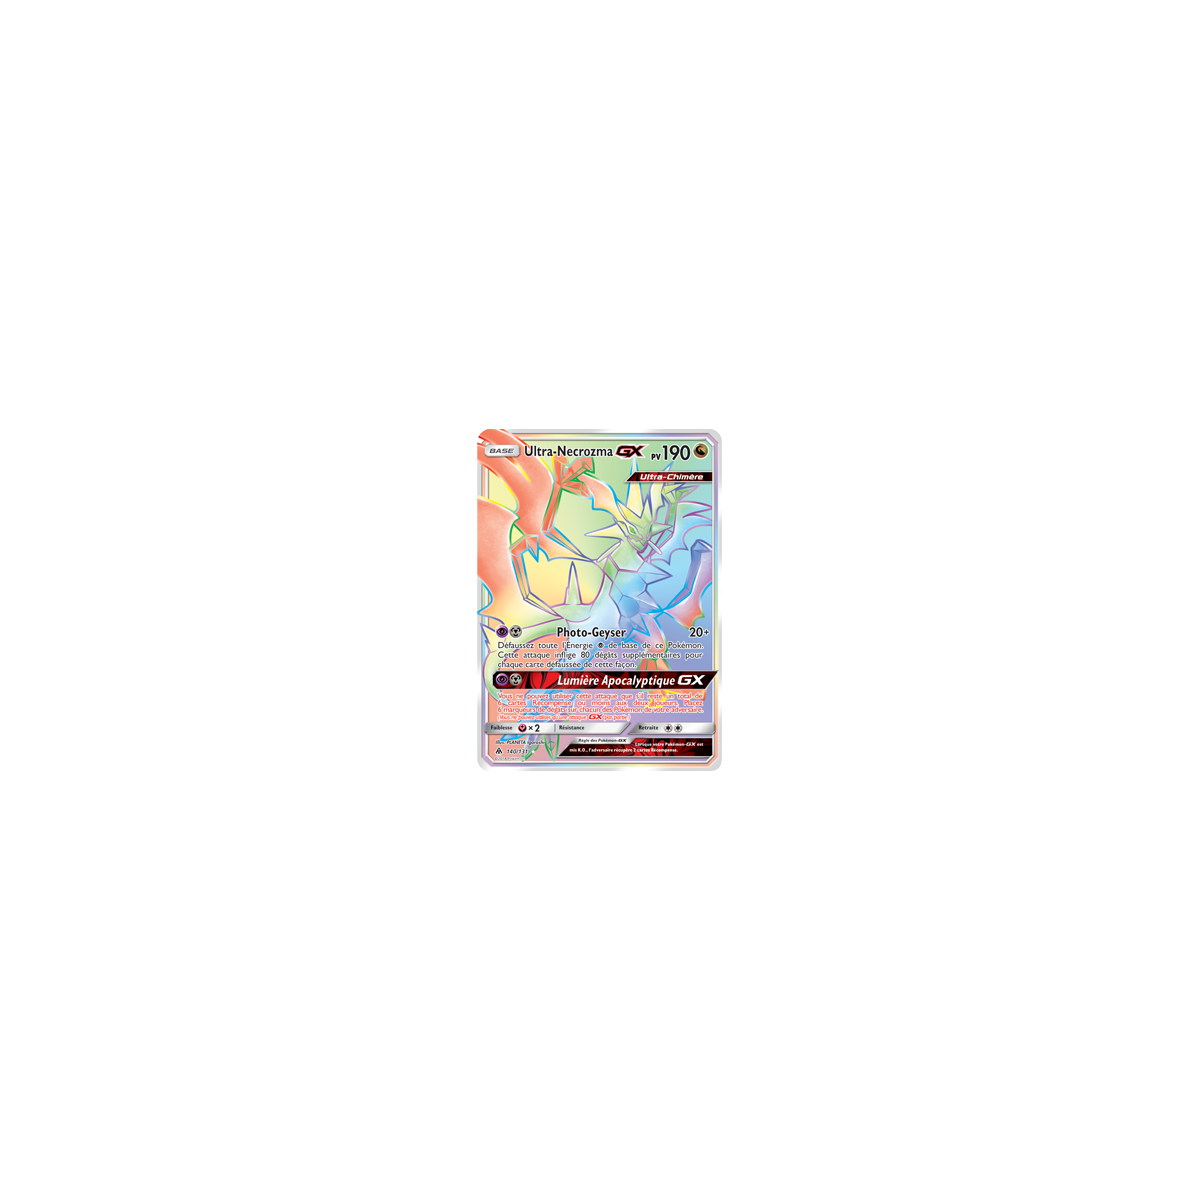 Carte Ultra-Necrozma - Arc-en-ciel rare de Pokémon Lumière Interdite 140/131